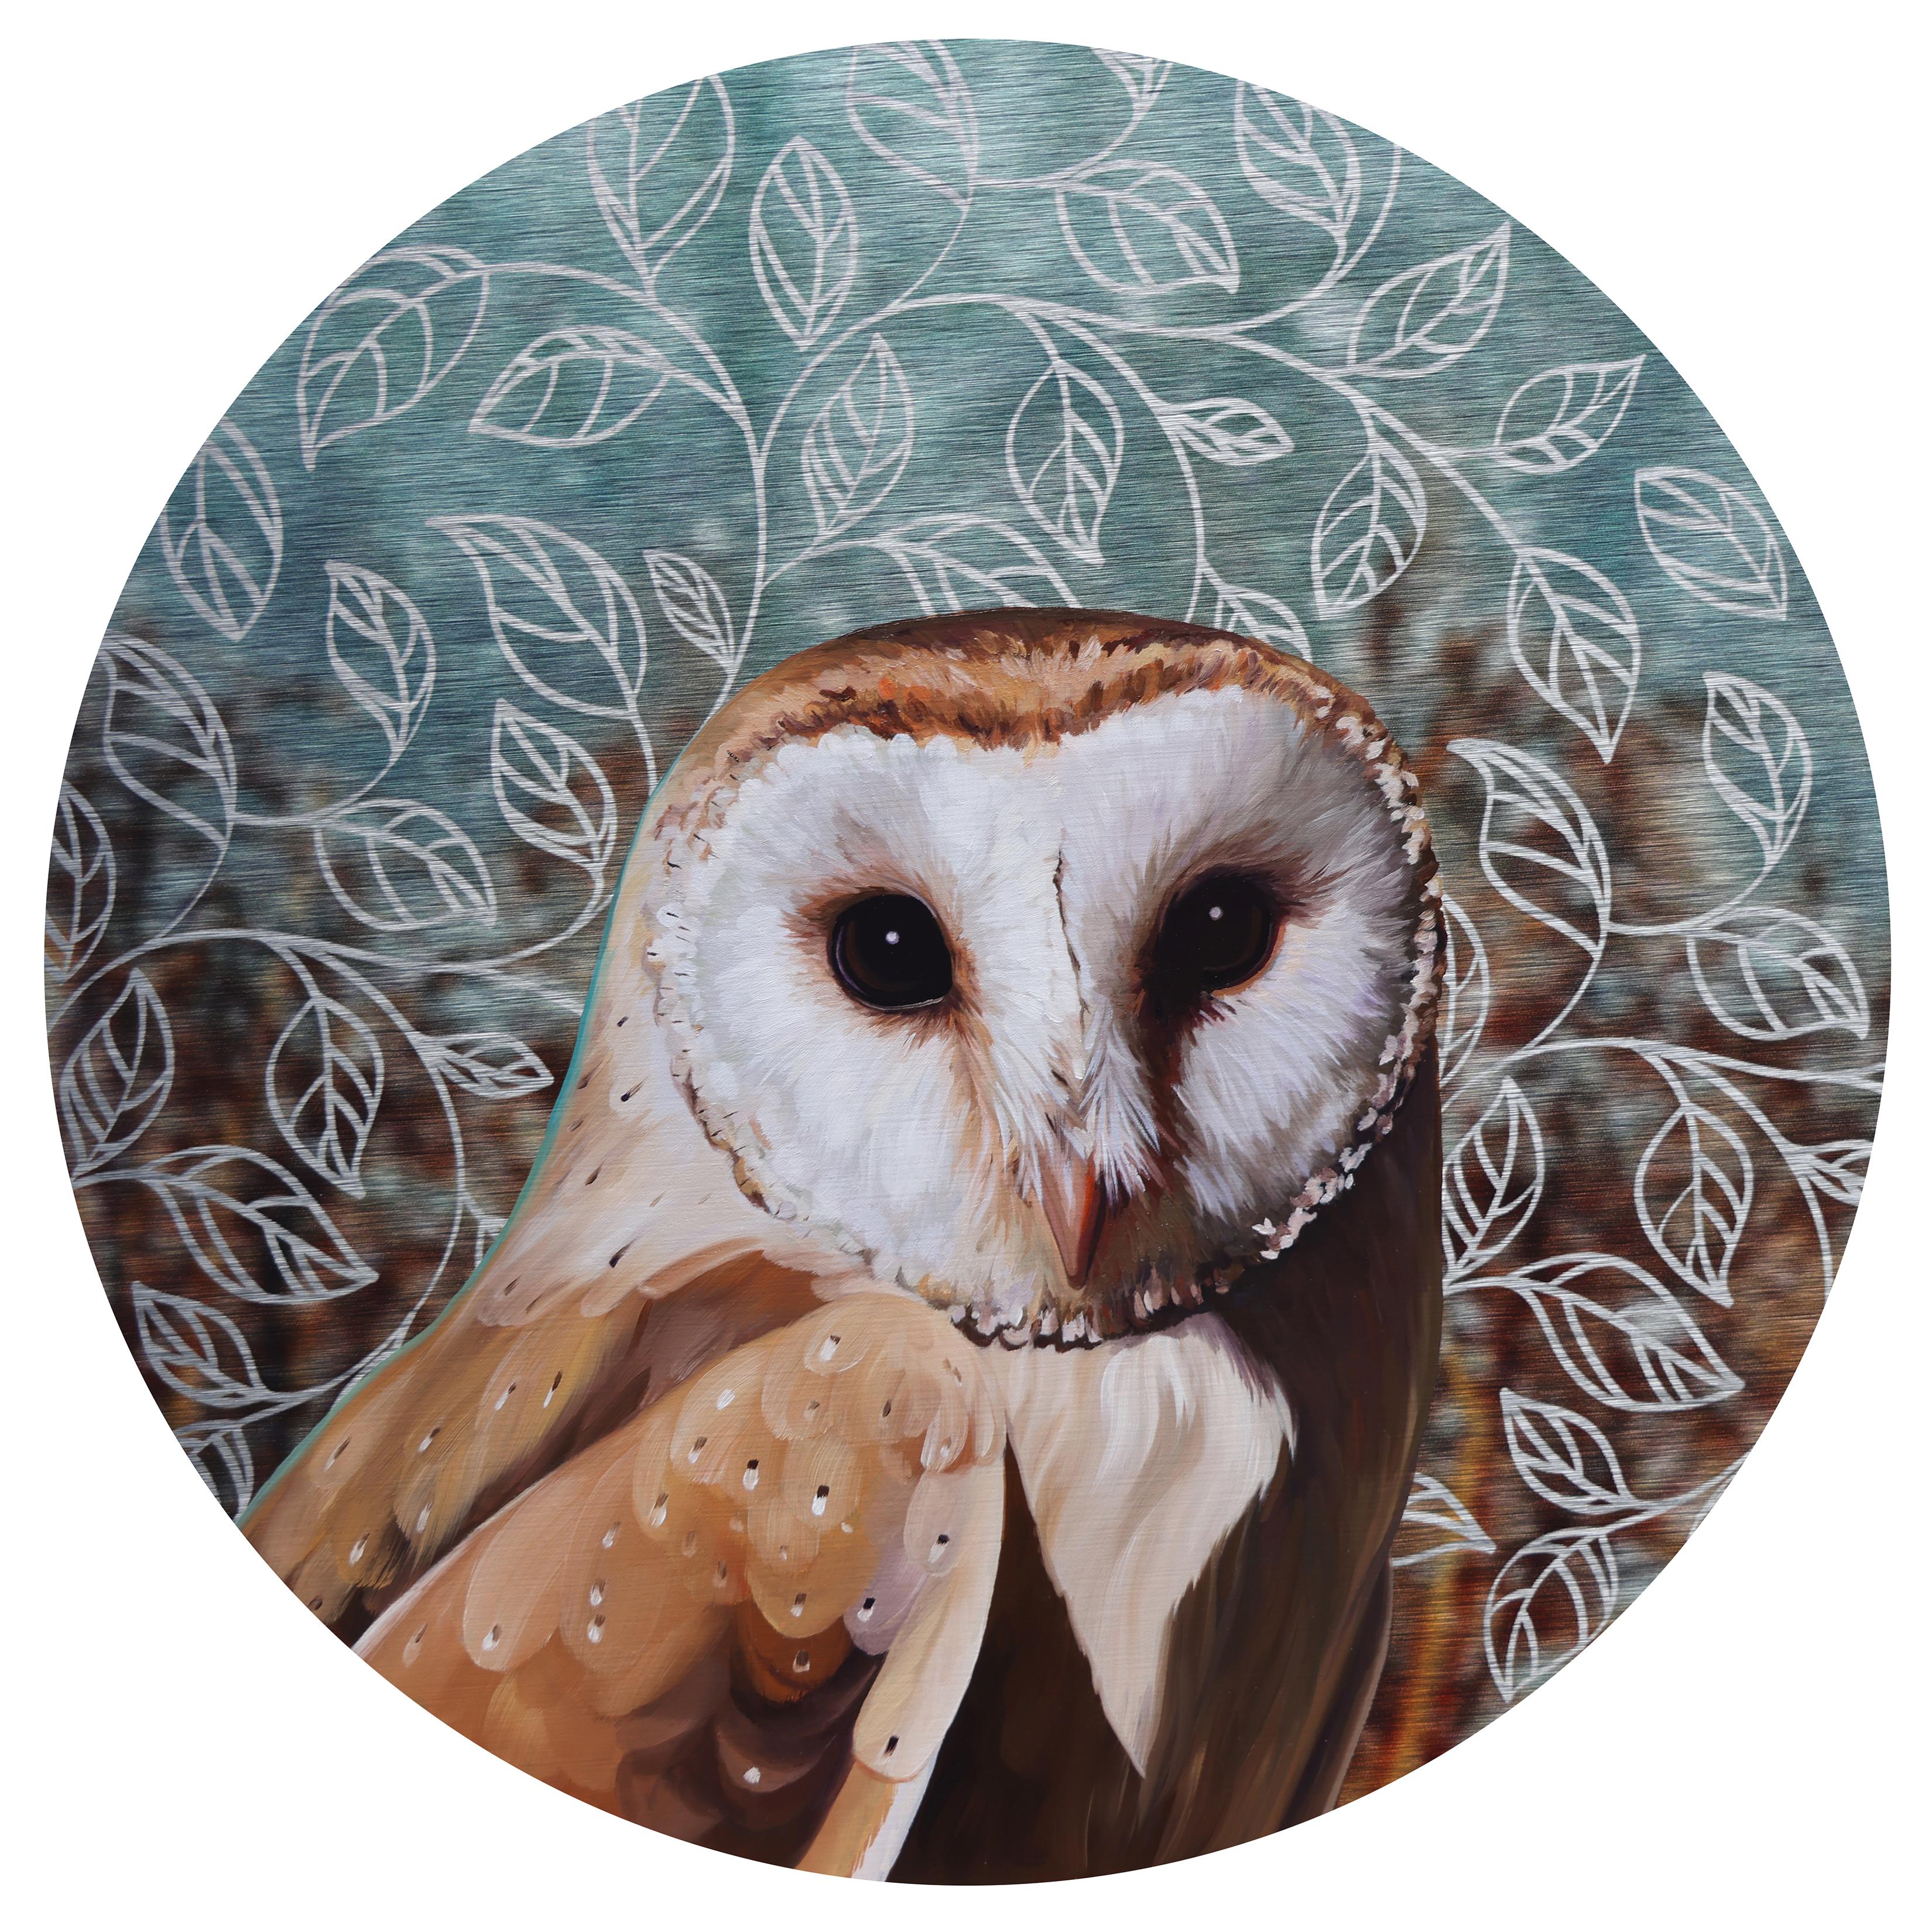 Allison Leigh Smith Figurative Painting - "Reflection: Barn Owl" - Original Oil Painting, Wildlife Art